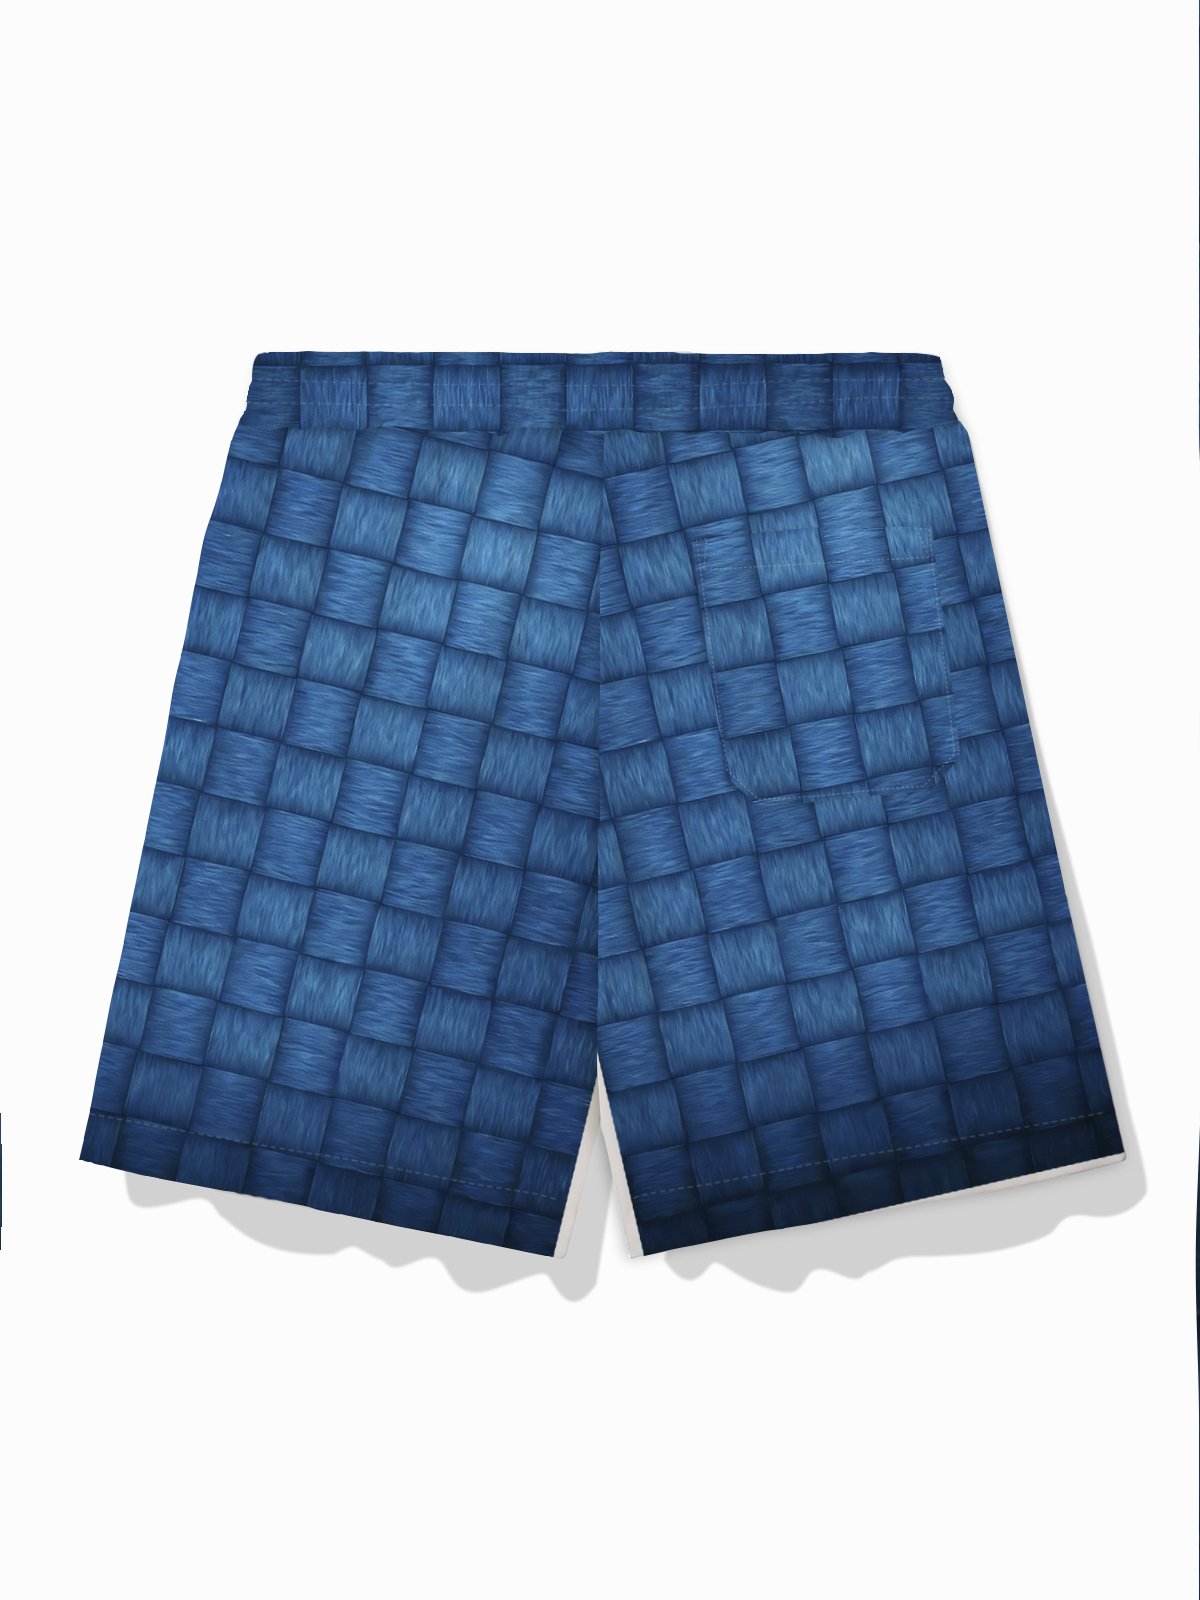 Royaura® Retro Geometric Plaid Print Men's Drawstring Elastic Pocket Board Shorts